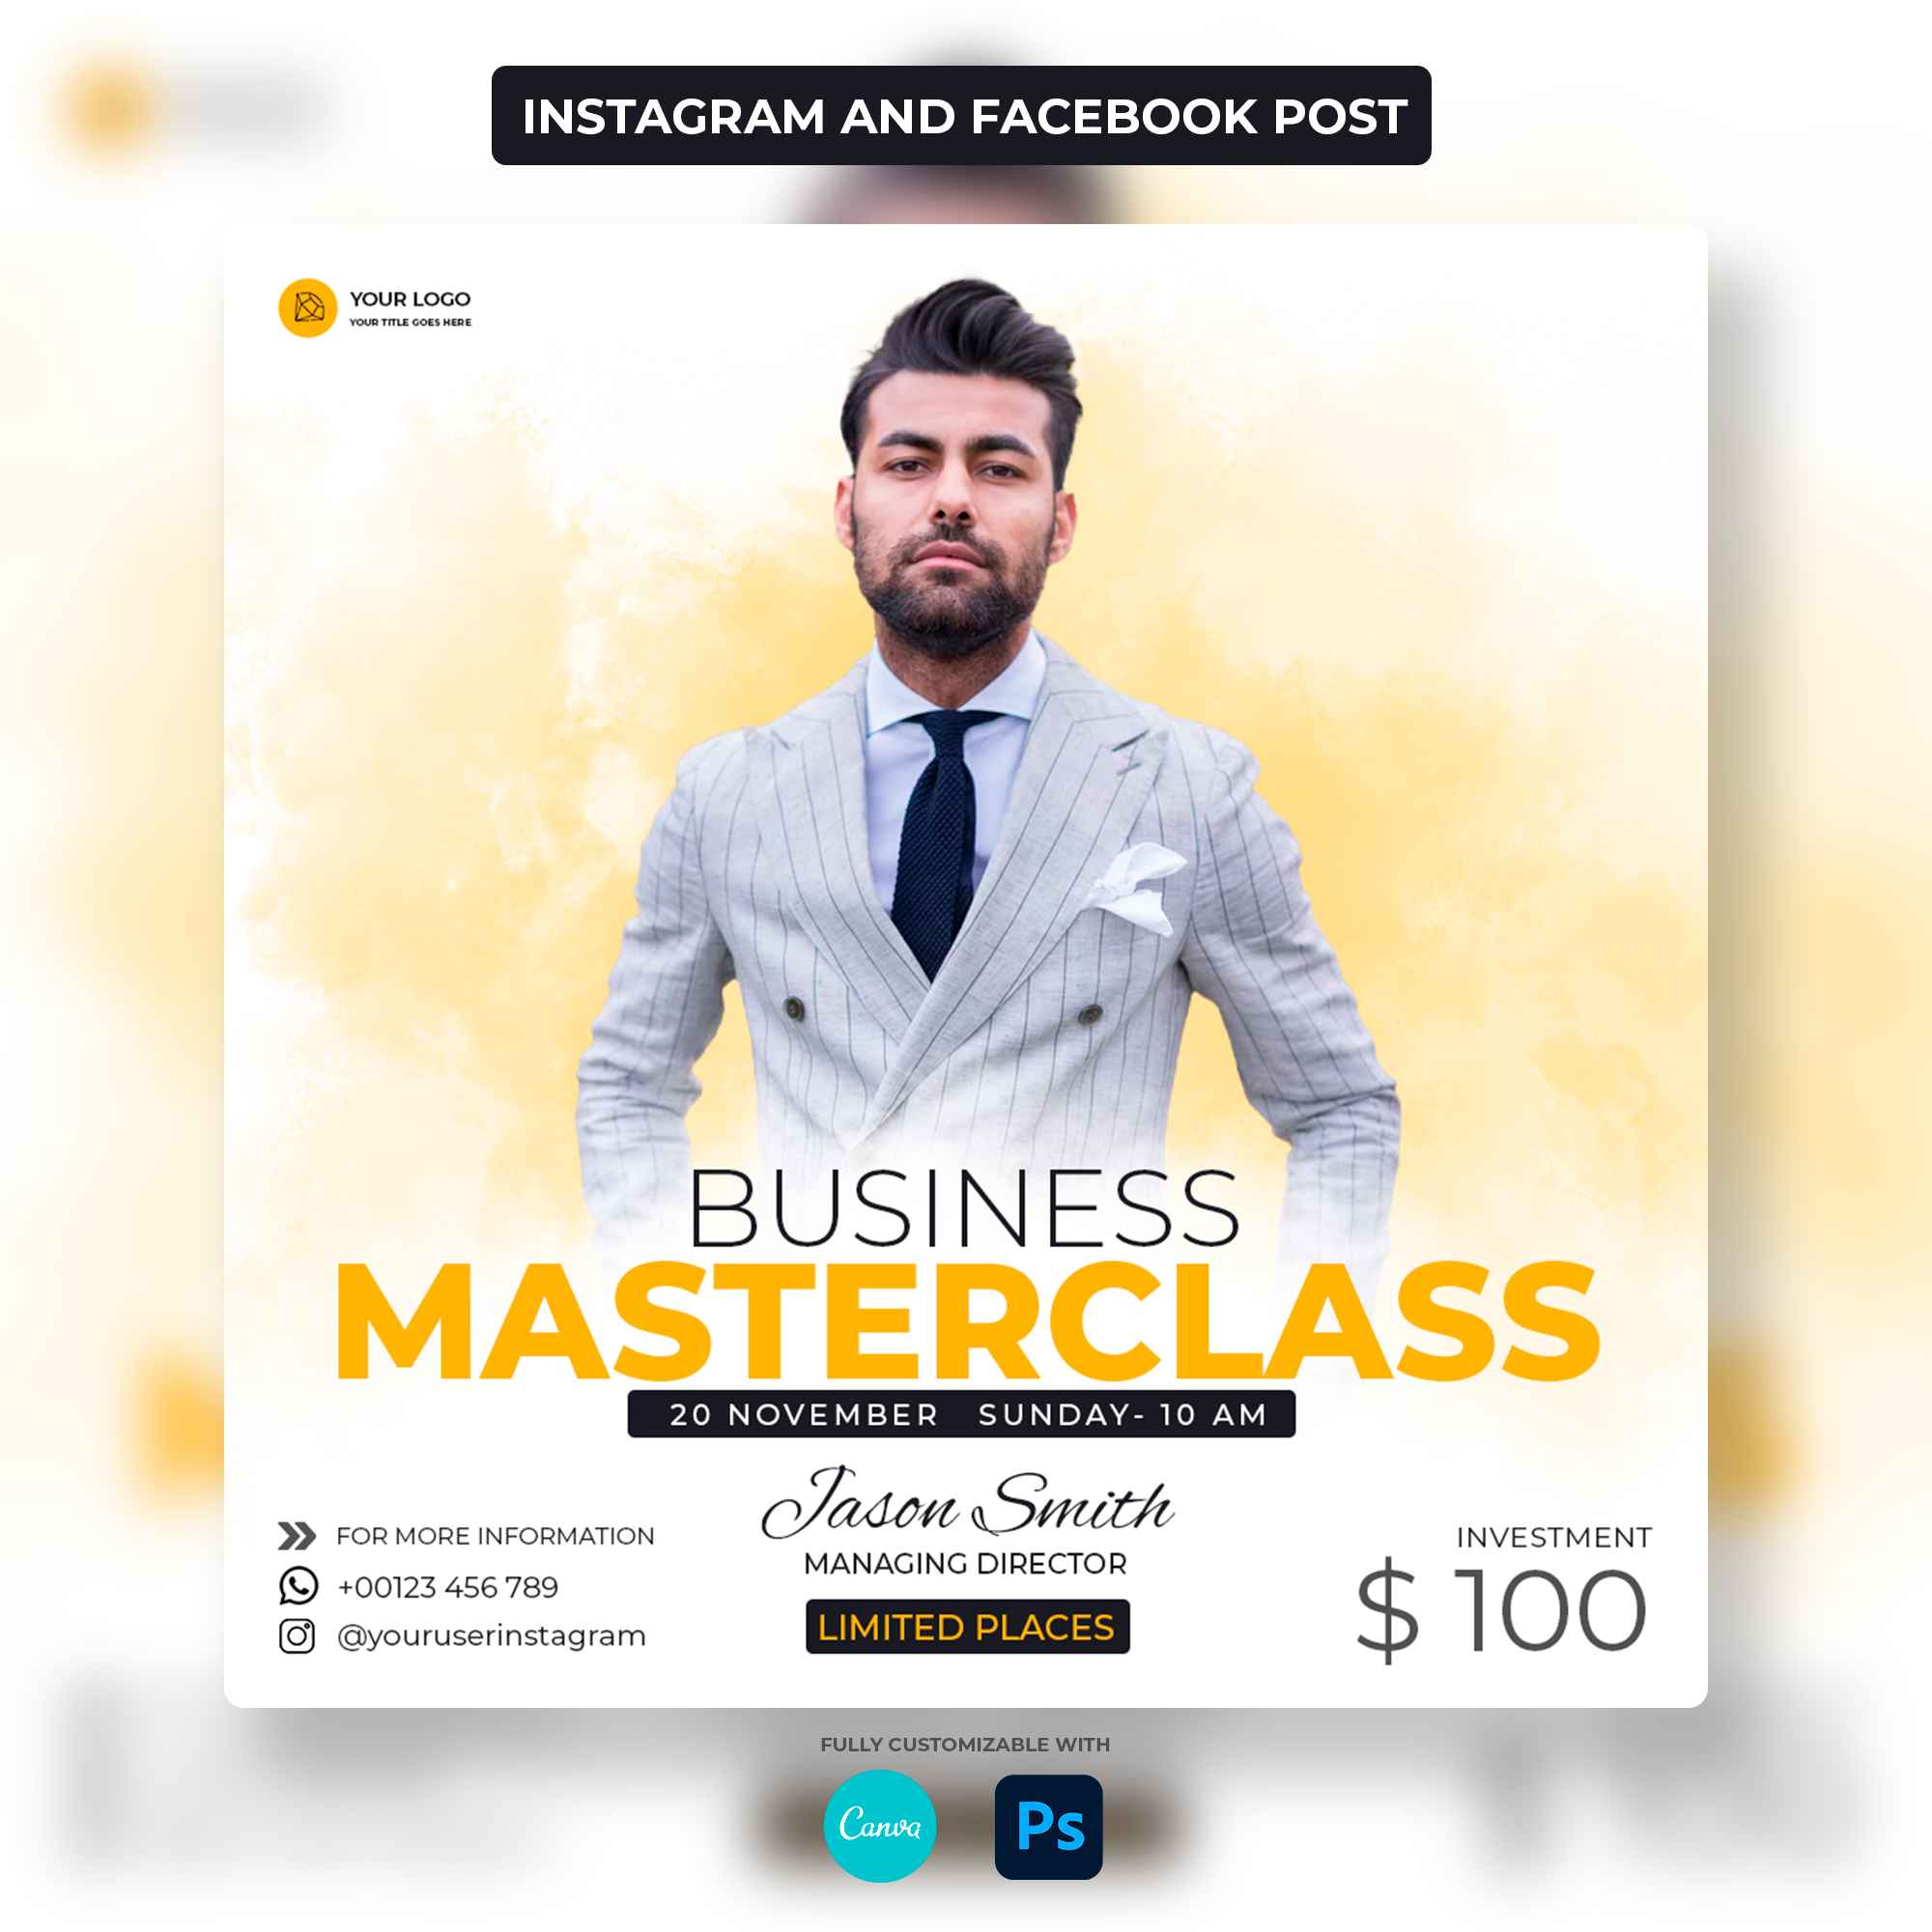 Masterclass Social Media Flyer cover image.